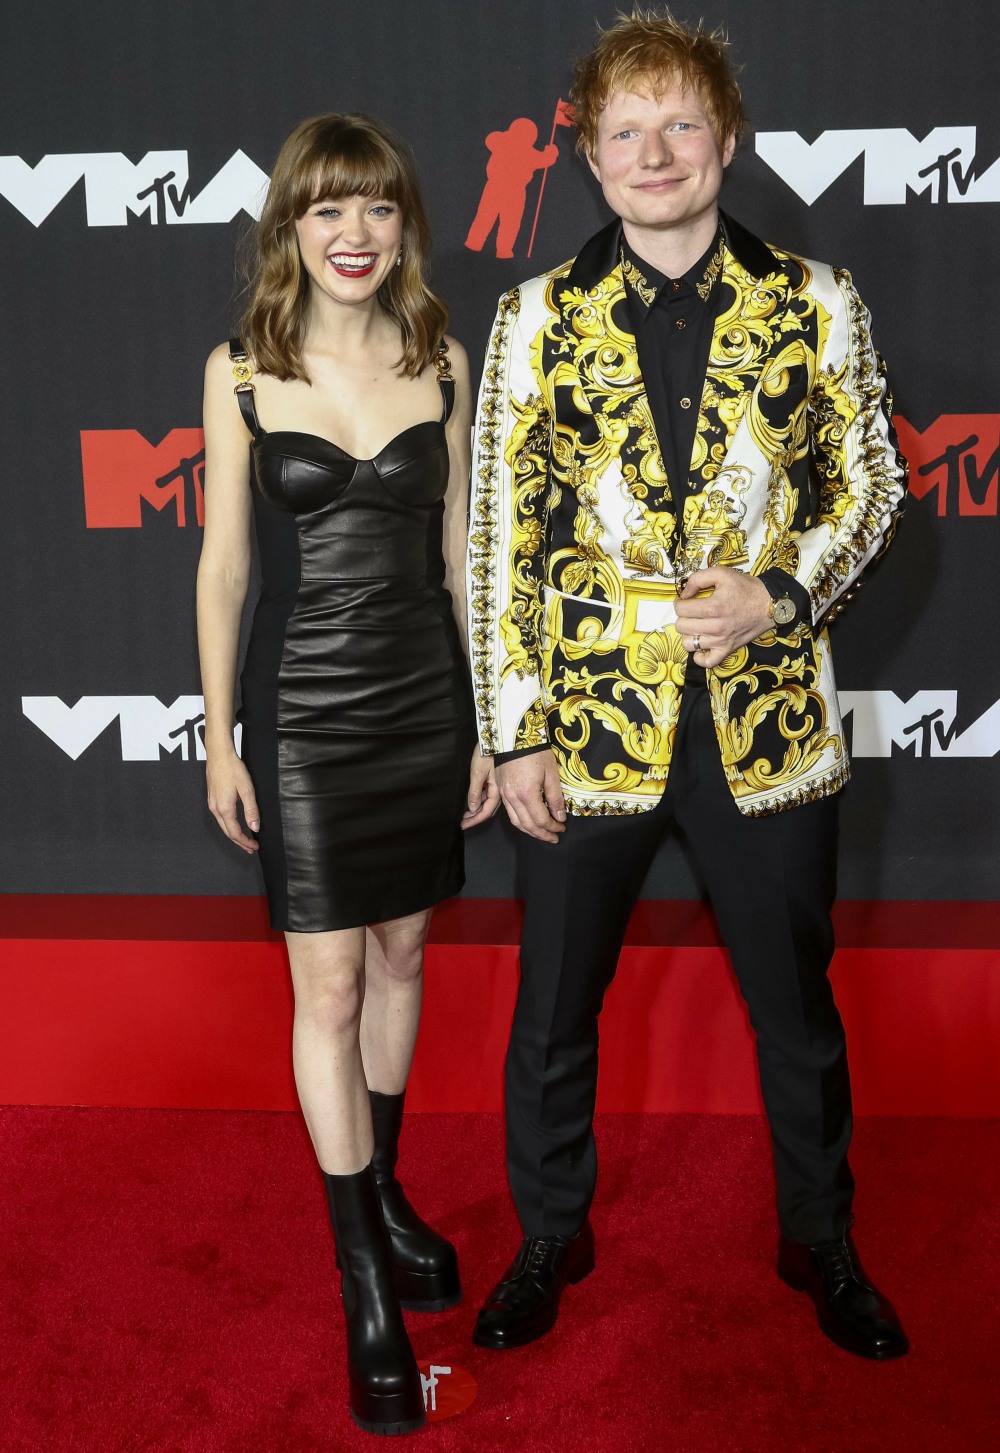 2021 MTV Video Music Awards